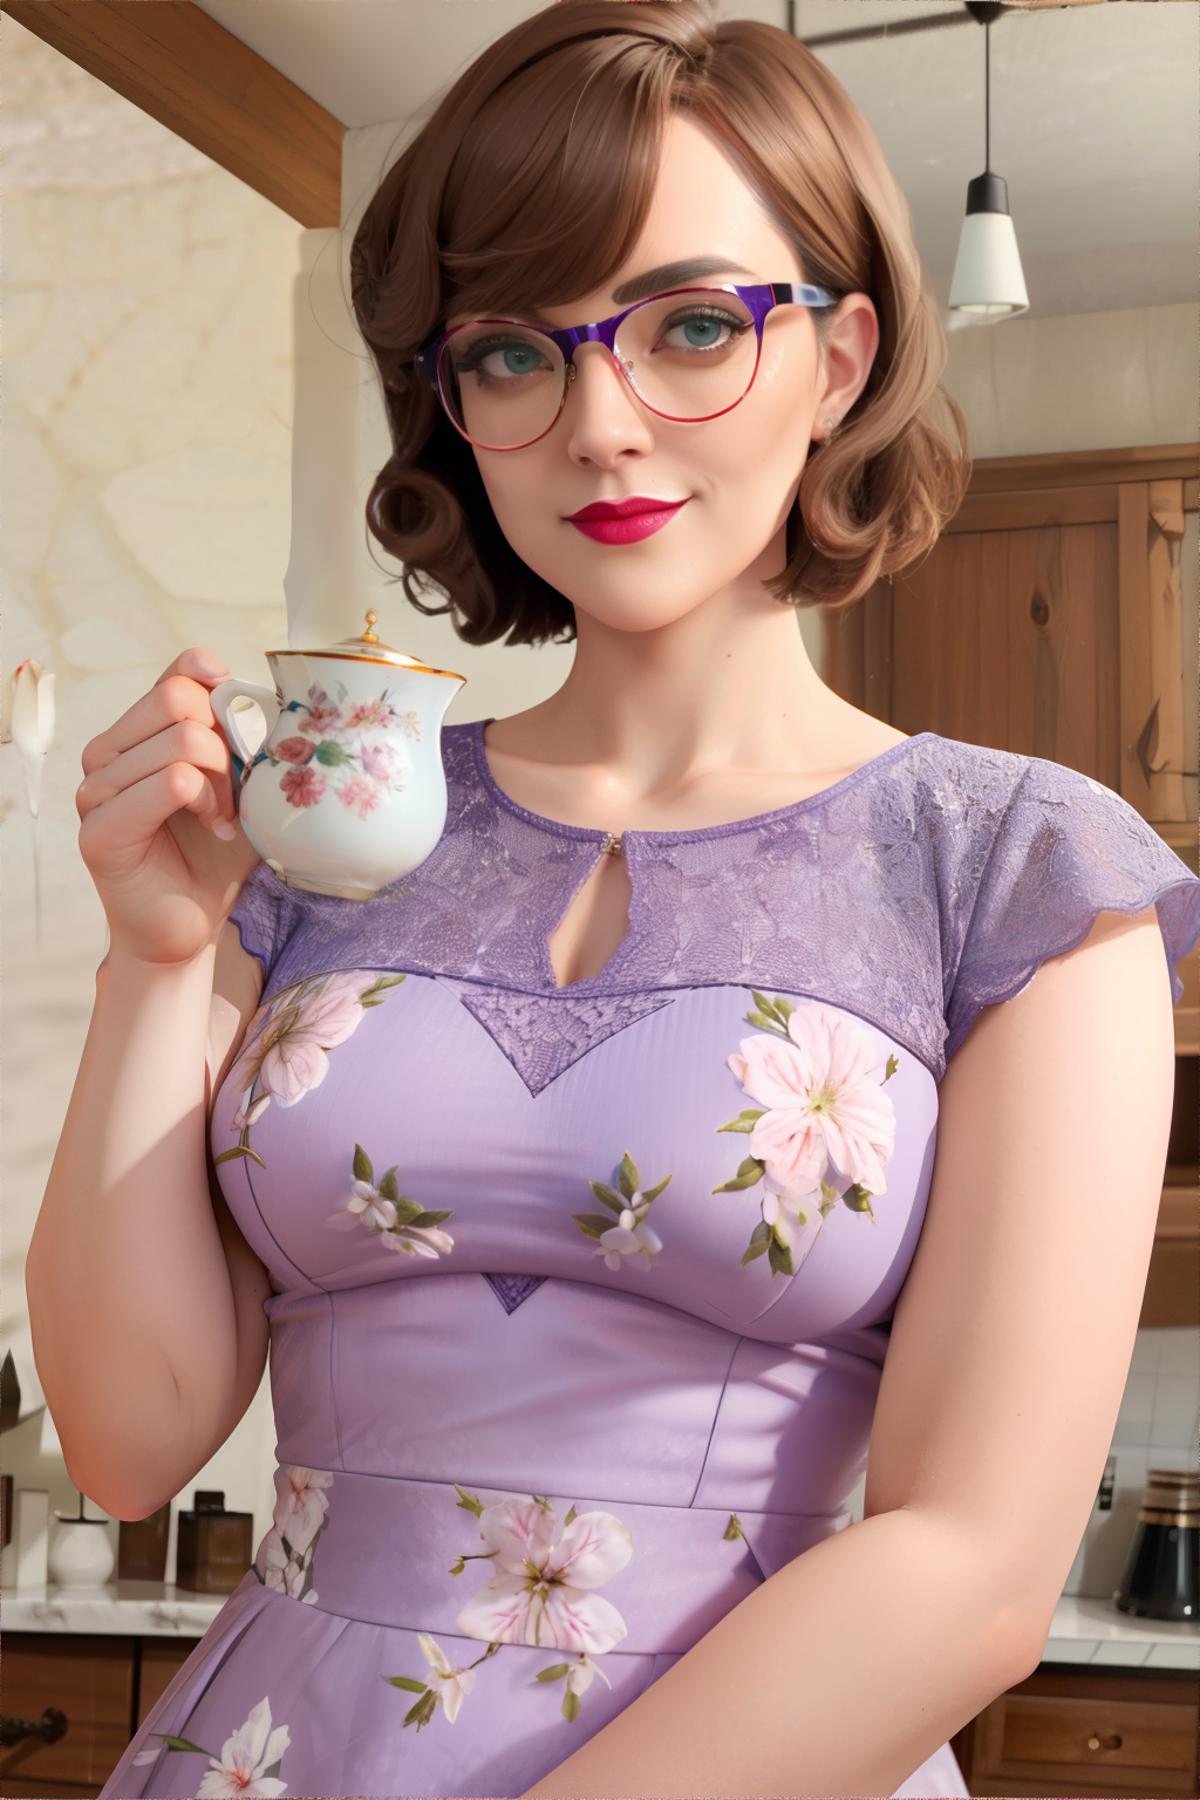 Proper Attire | Vintage Tea Dress - by EDG image by bzlibby